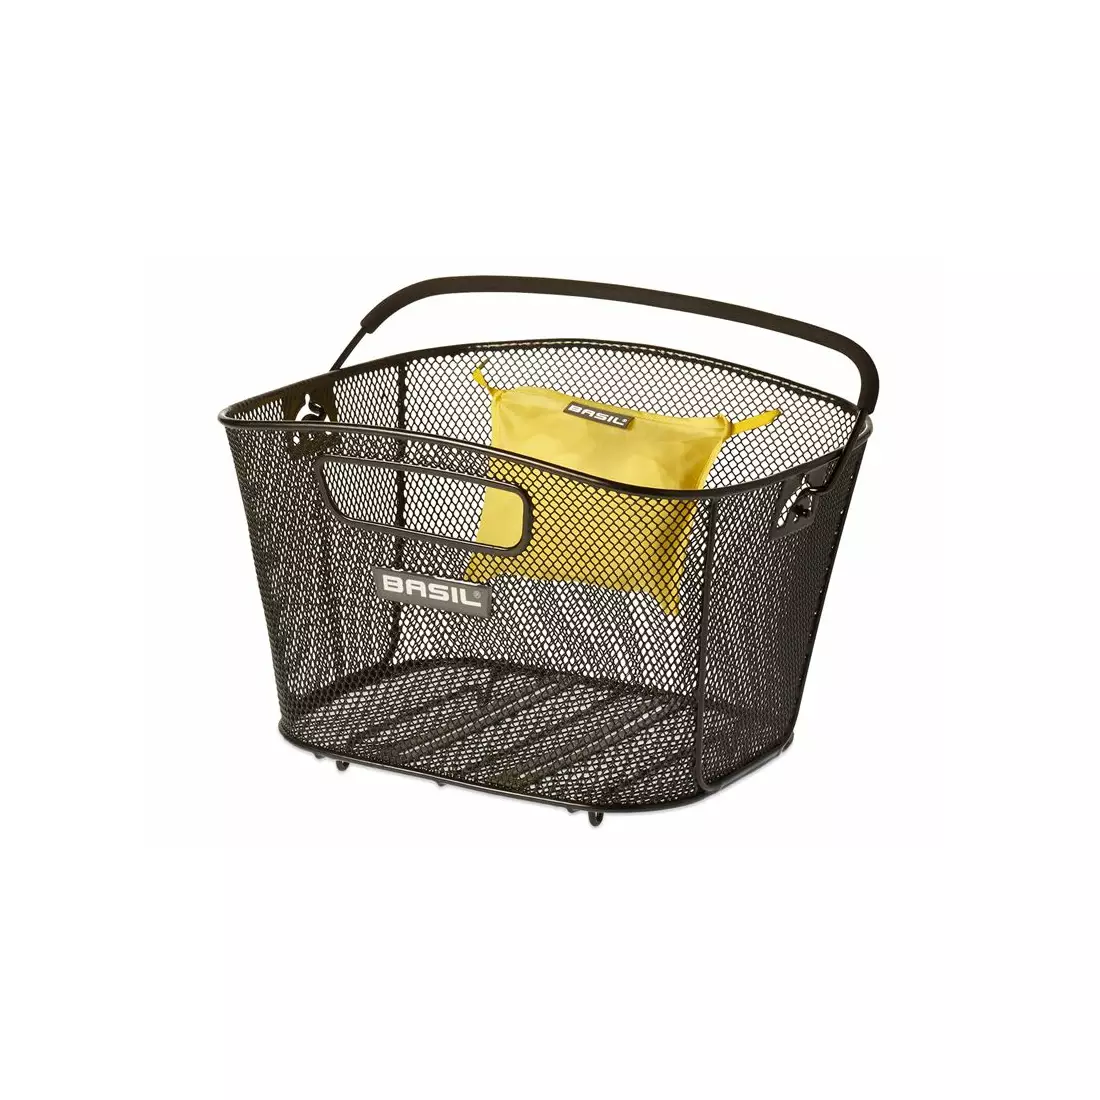 Shopping bag BASIL KEEP SHOPPER yellow neon (DWZ) BAS-50452